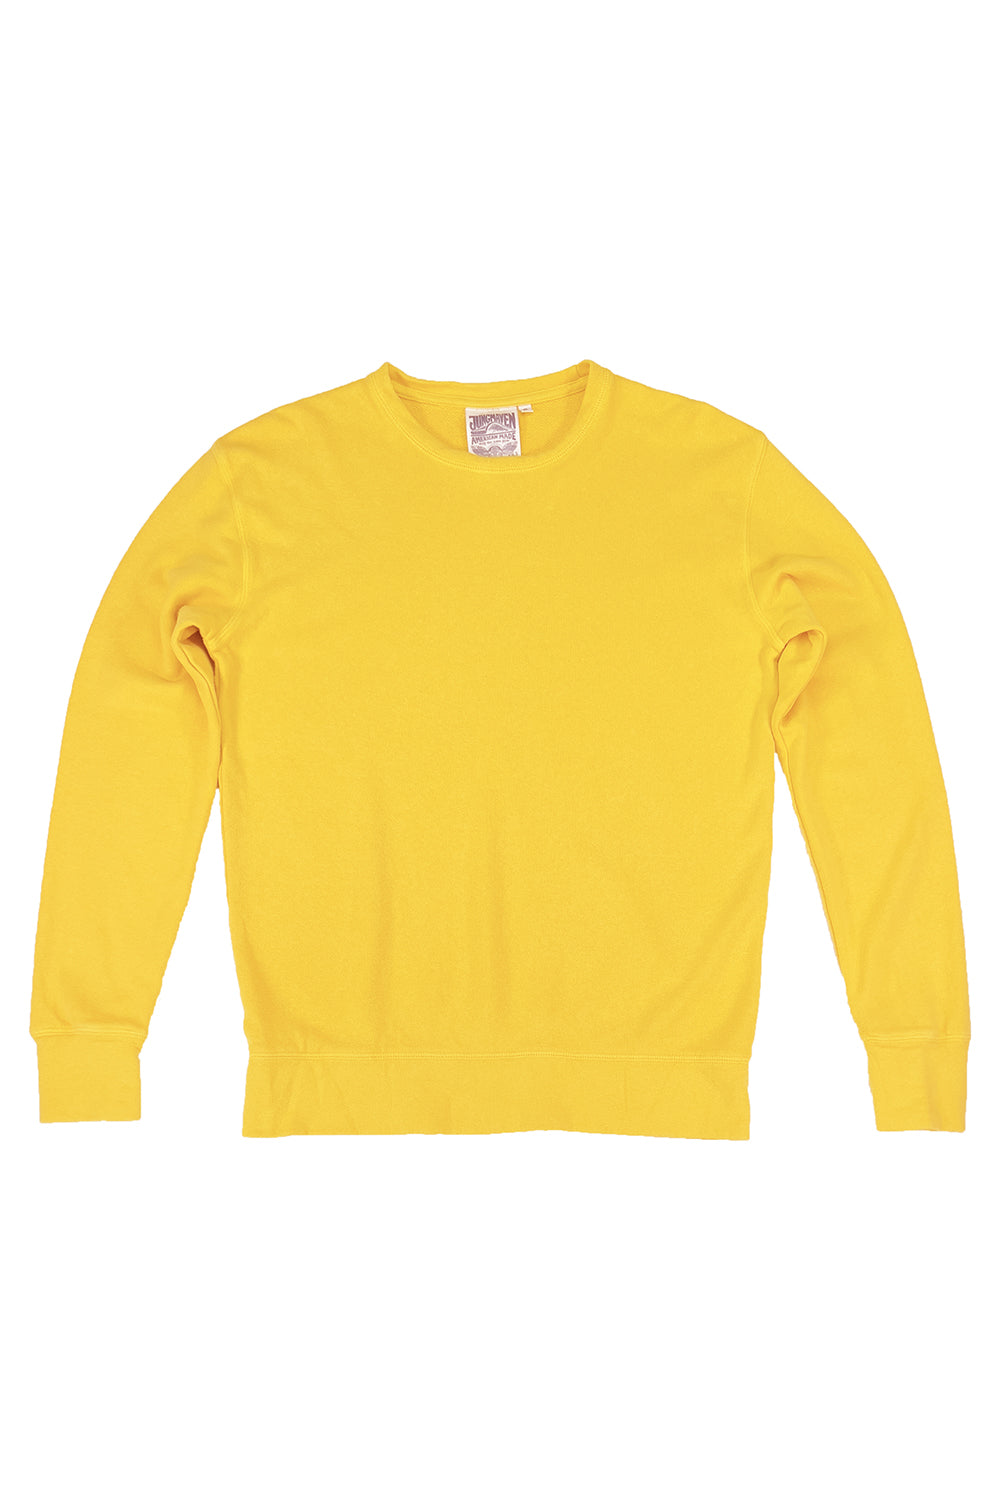 Tahoe Sweatshirt | Jungmaven Hemp Clothing & Accessories / Color: Sunshine Yellow